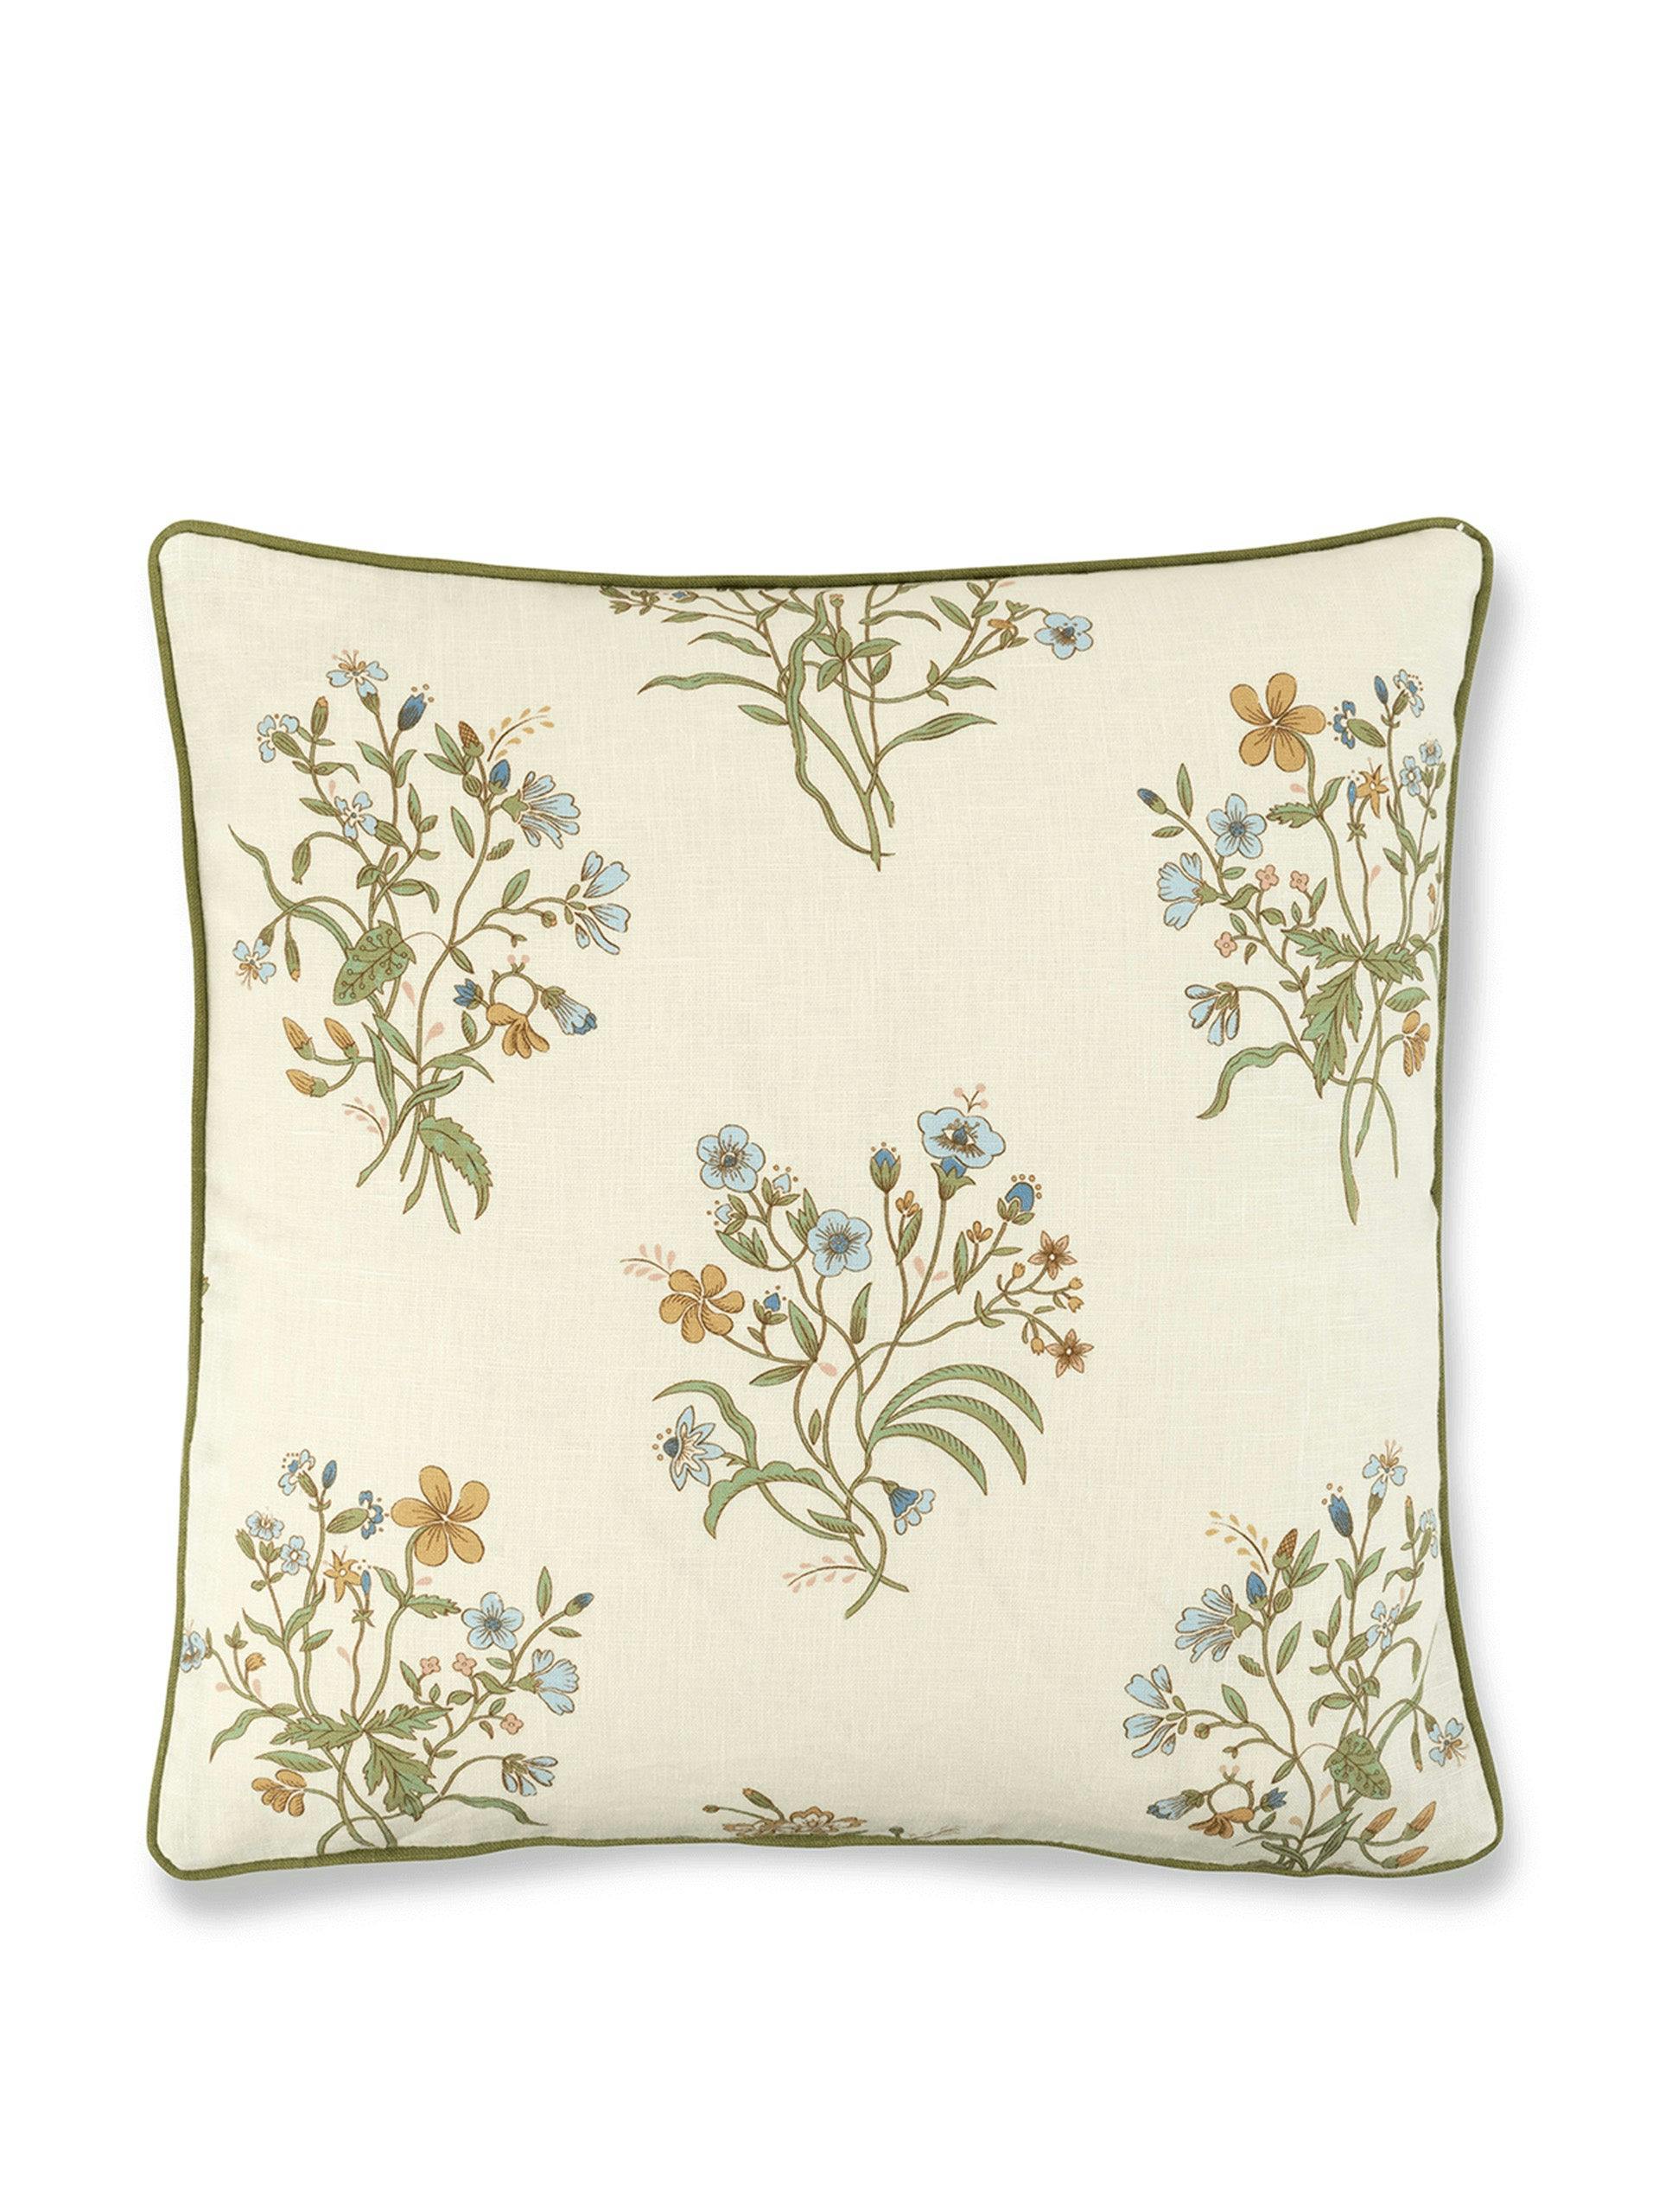 Flax and field flower cushion with fern green trim